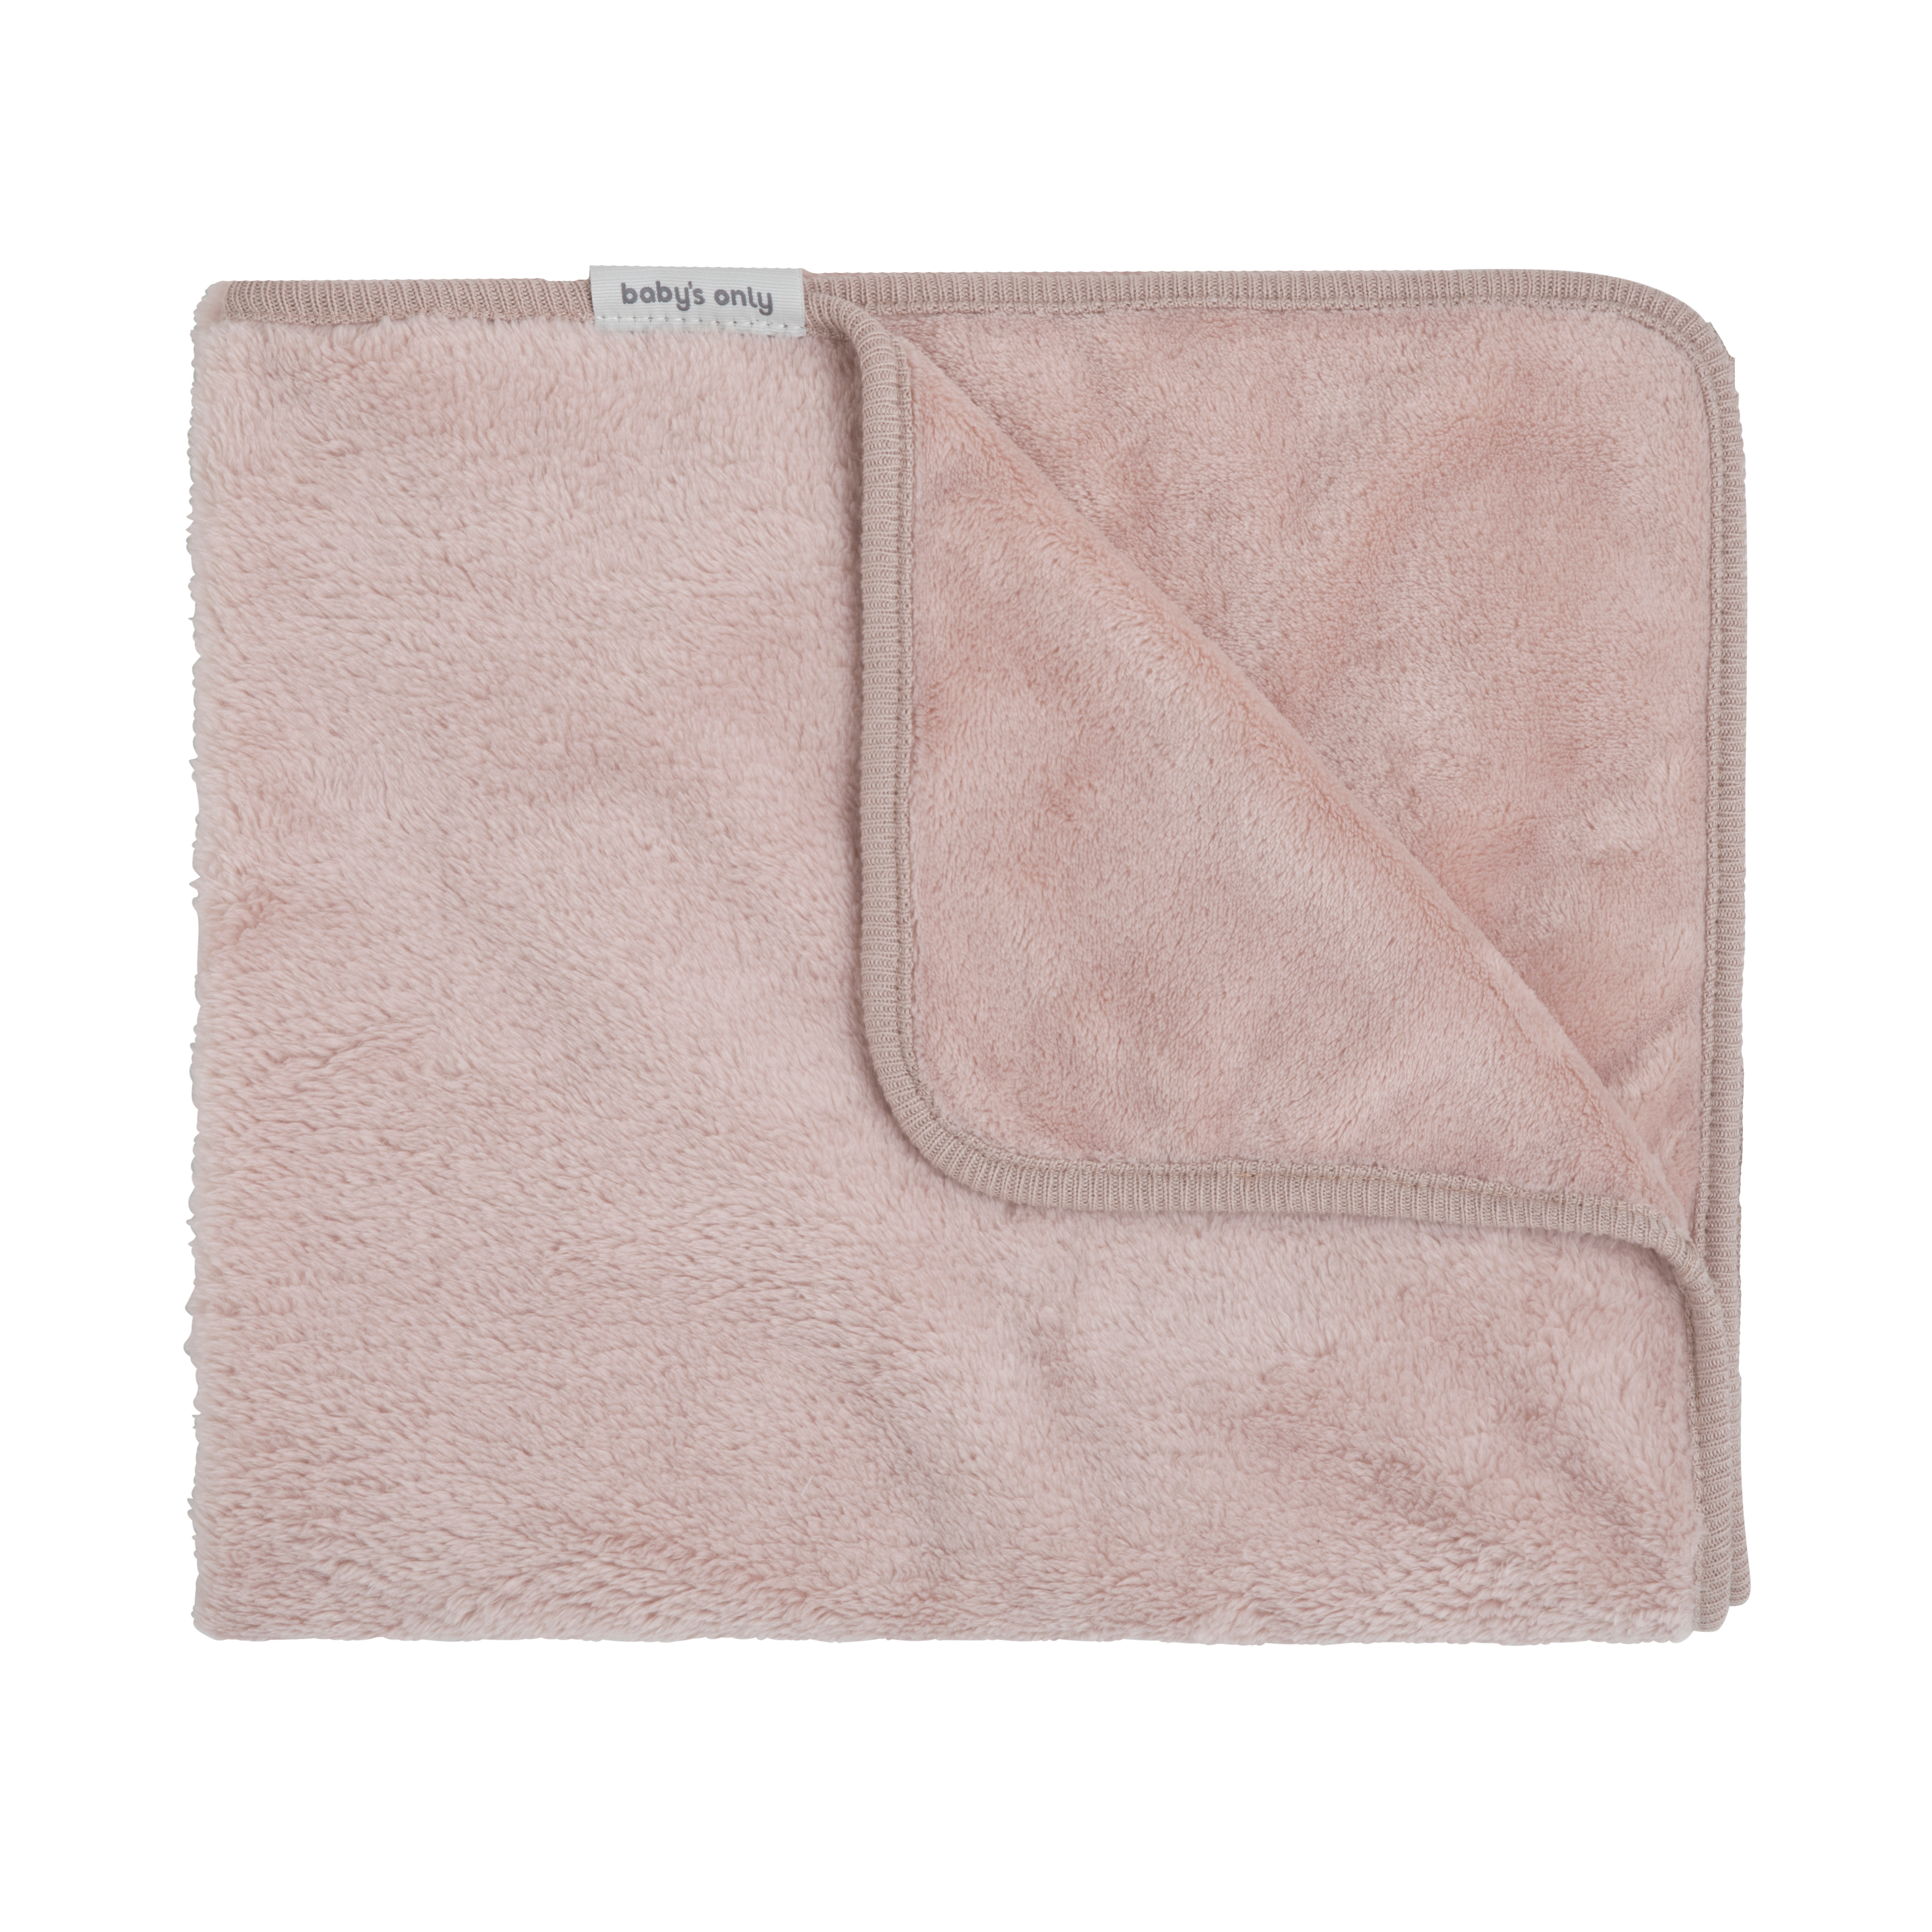 Cot blanket Cozy old pink